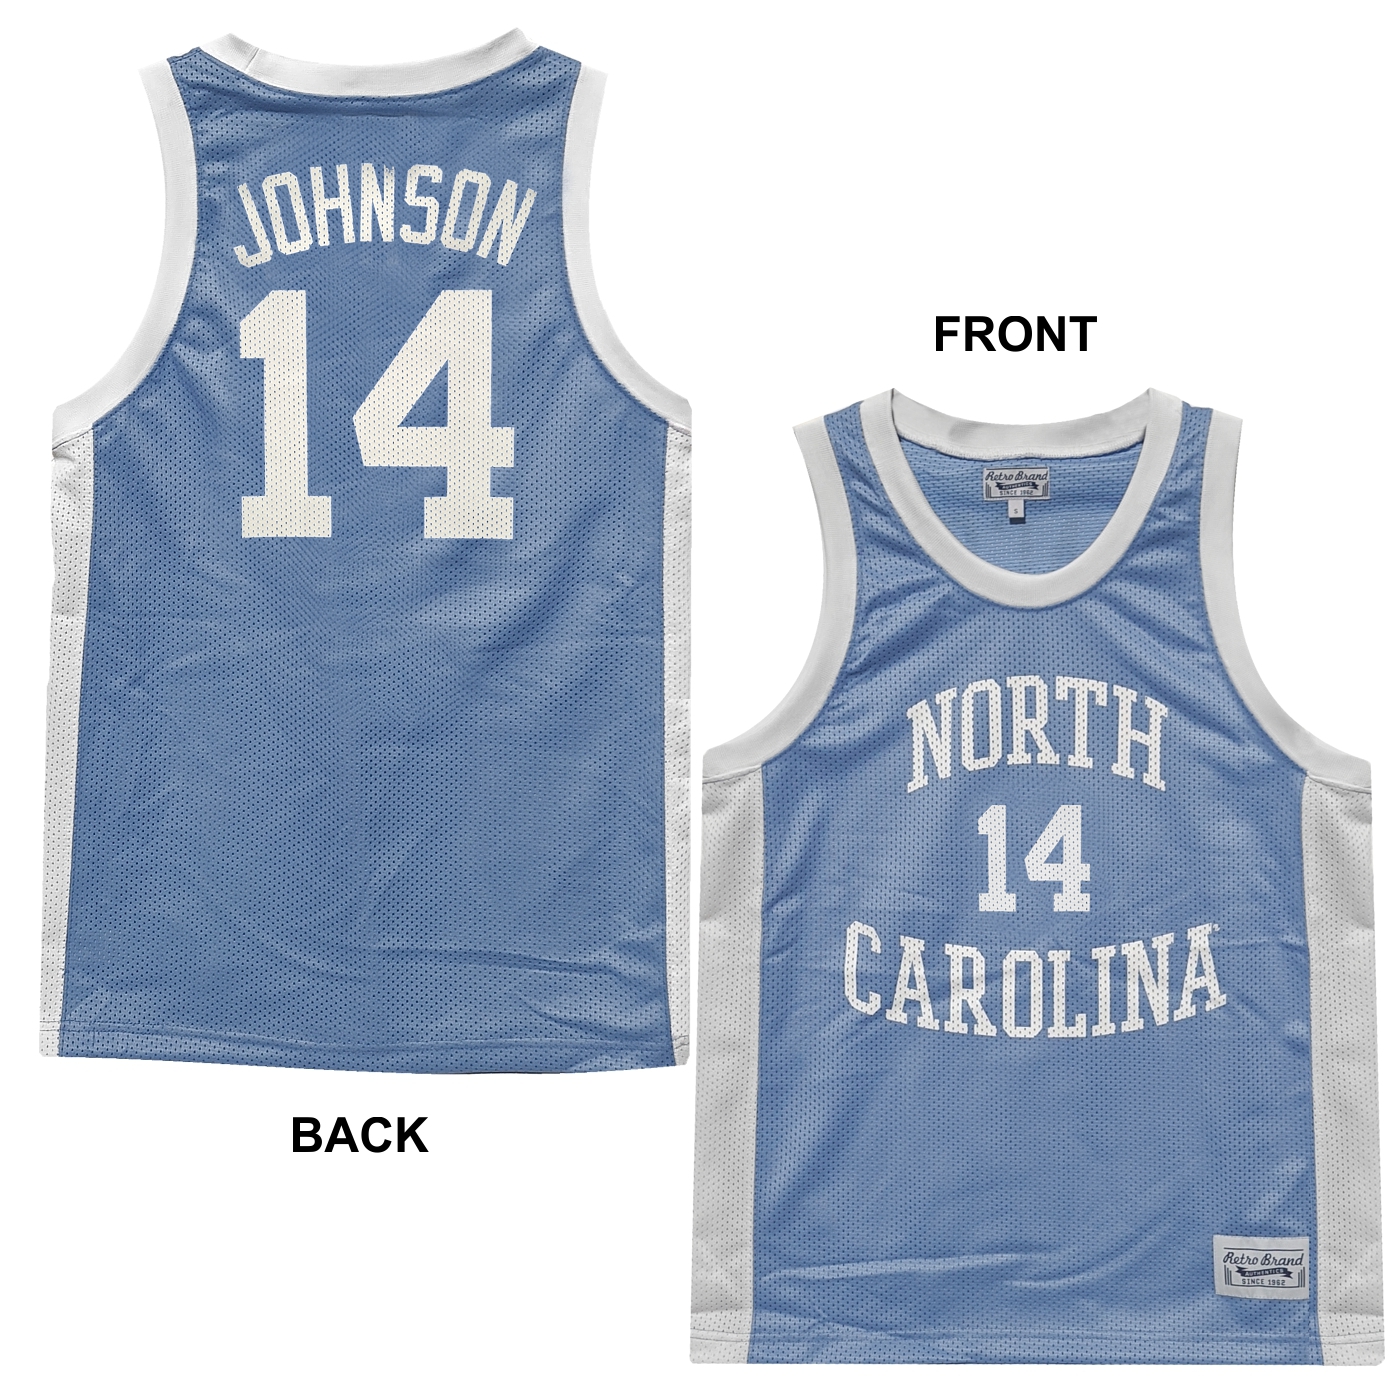 Puff Johnson #14 Basketball Jersey (CB) by Original Retro Brand